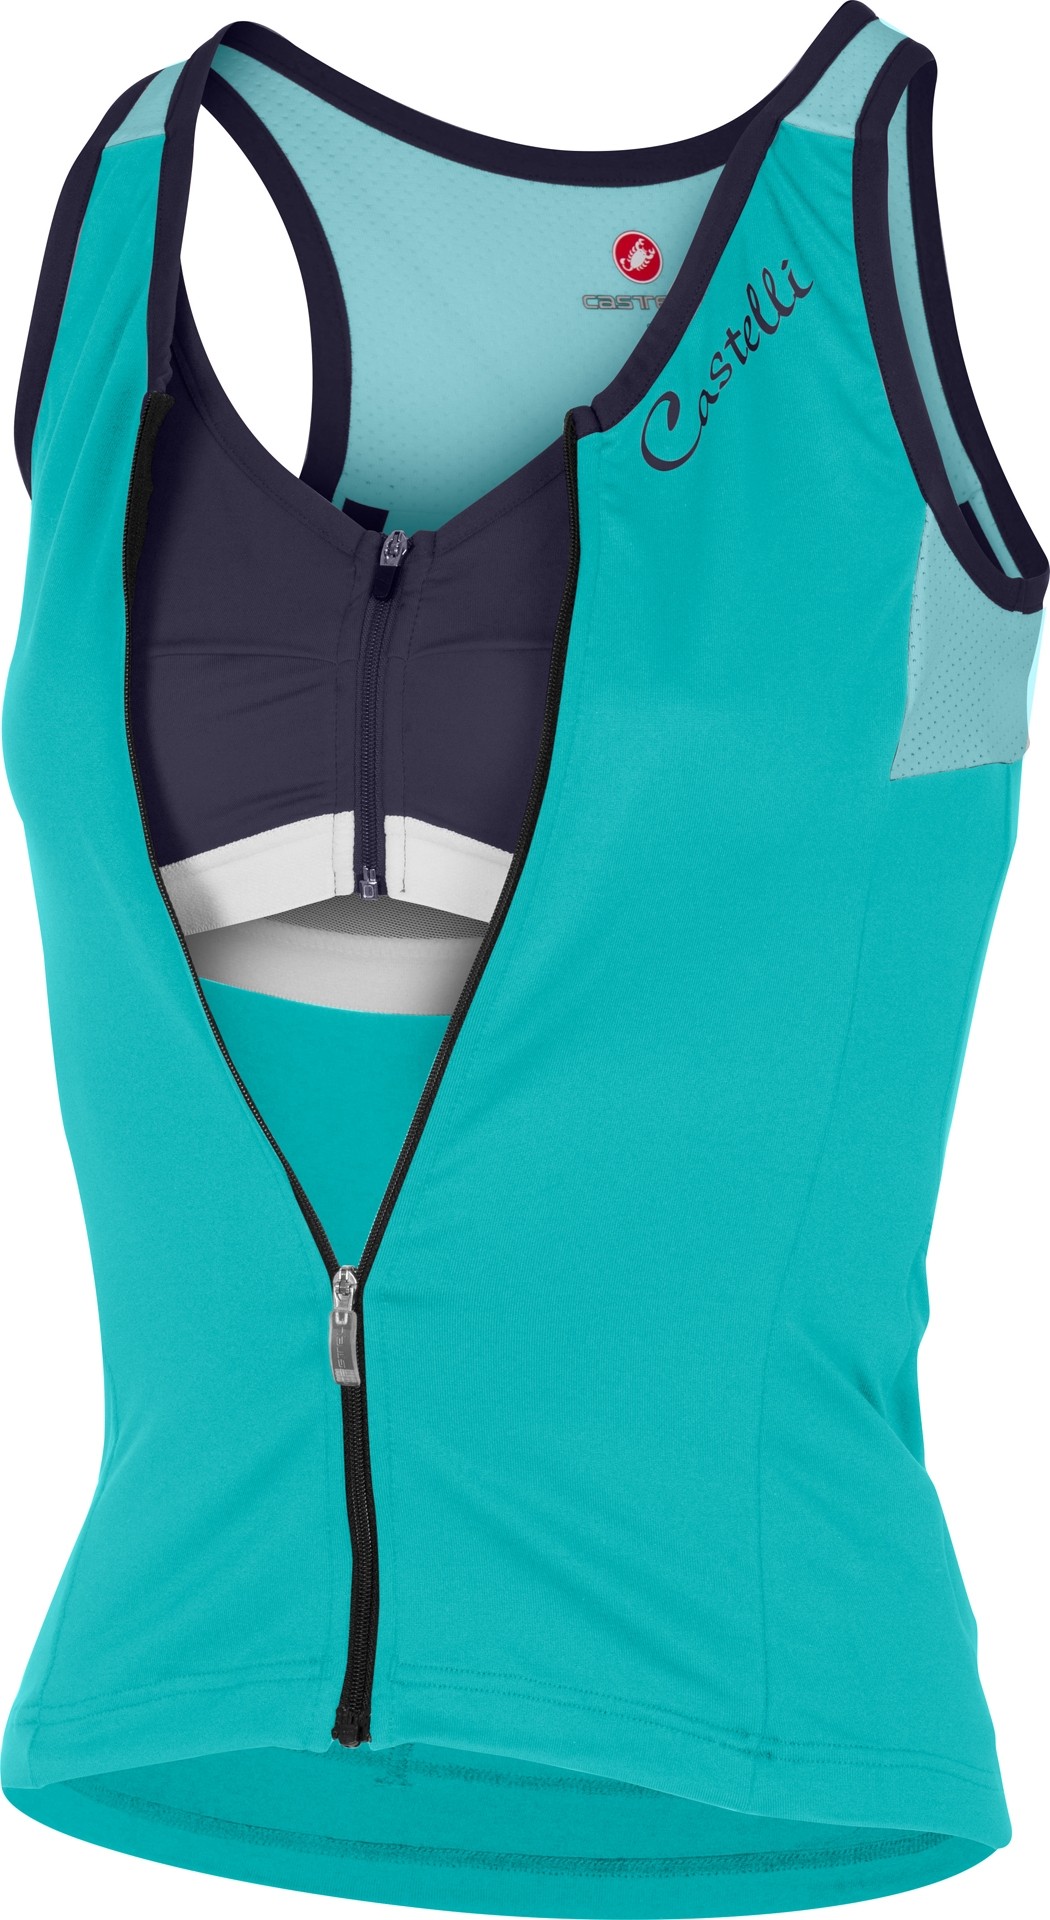 Afleiden trainer bord Castelli solare dames fietsshirt zonder mouwen turquoise groen aruba blauw